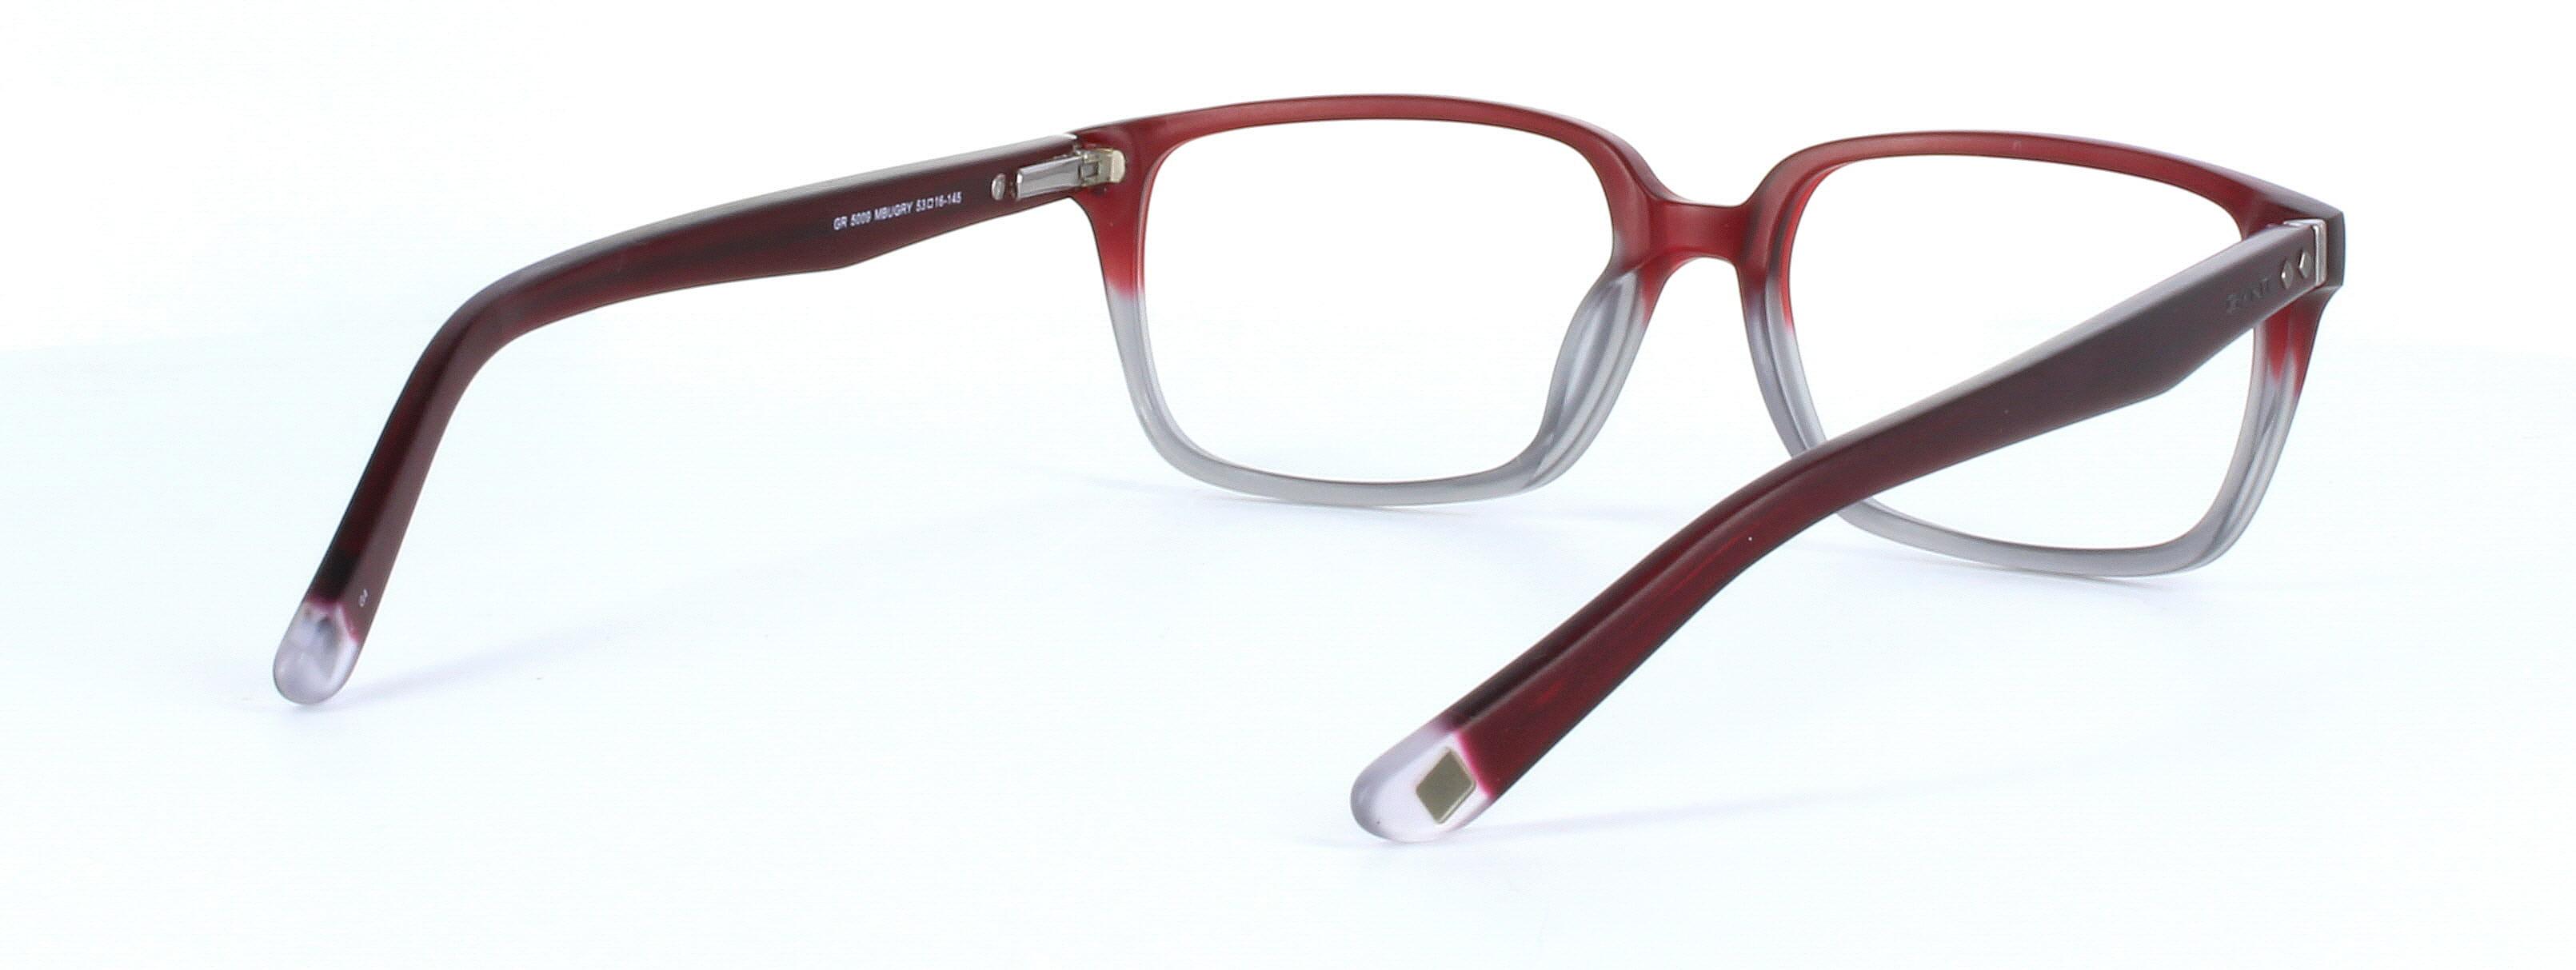 Gant 105 - Unisex 2-tone matt burgundy and grey acetate glasses - image view 4